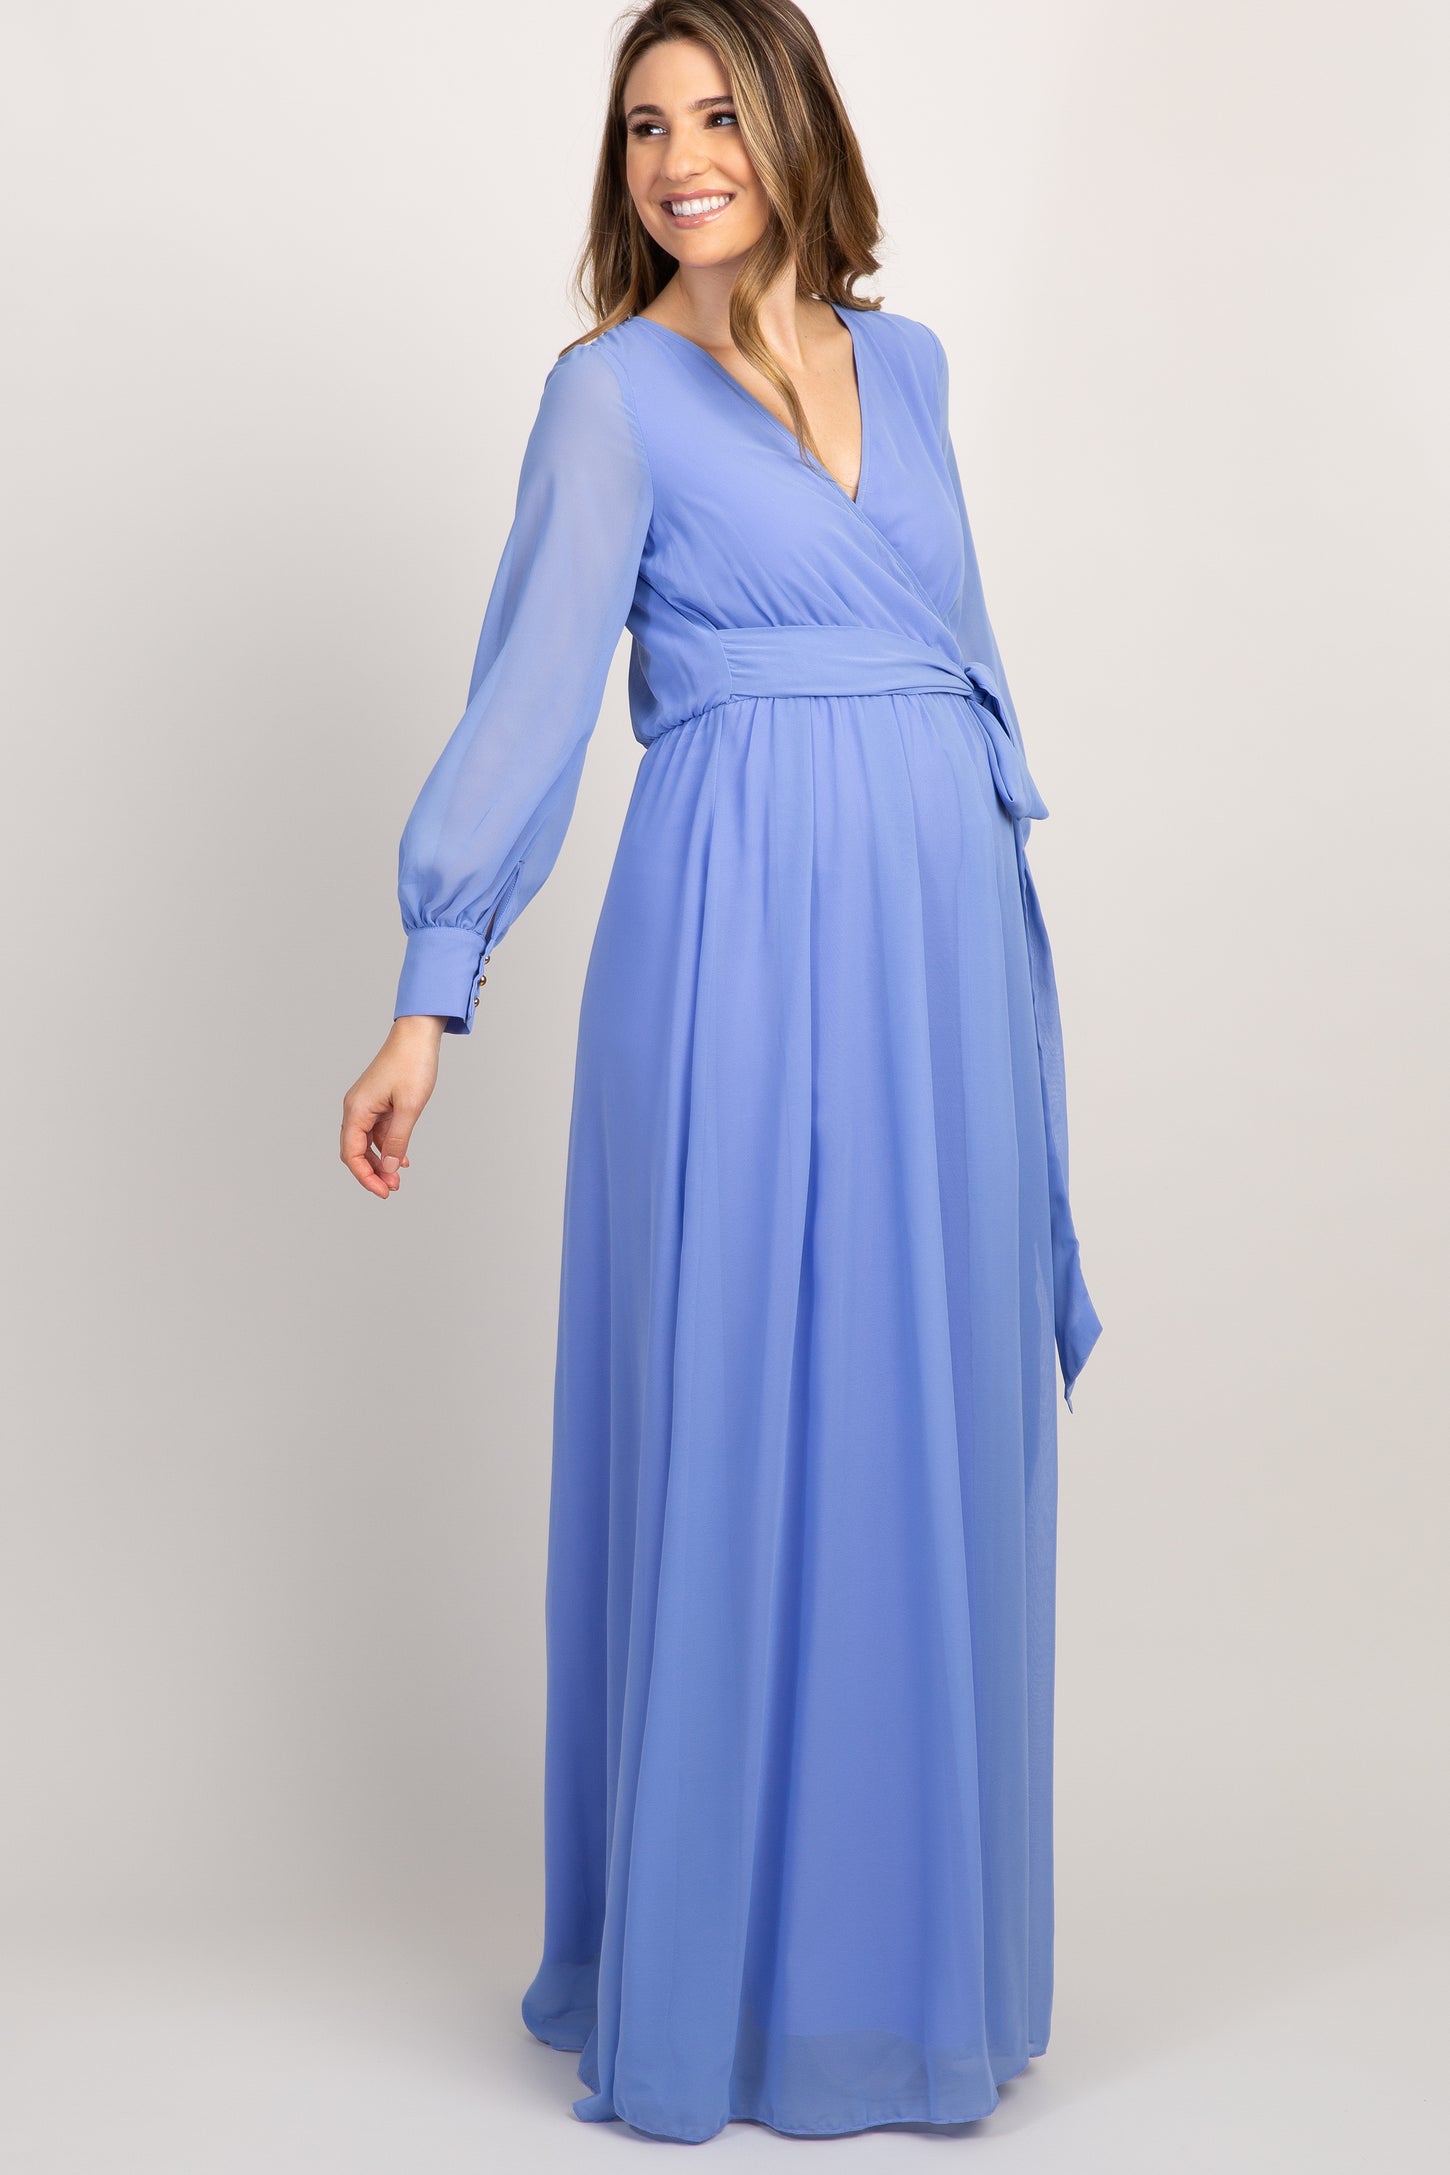 Periwinkle Chiffon Long Sleeve Pleated Maternity Maxi Dress